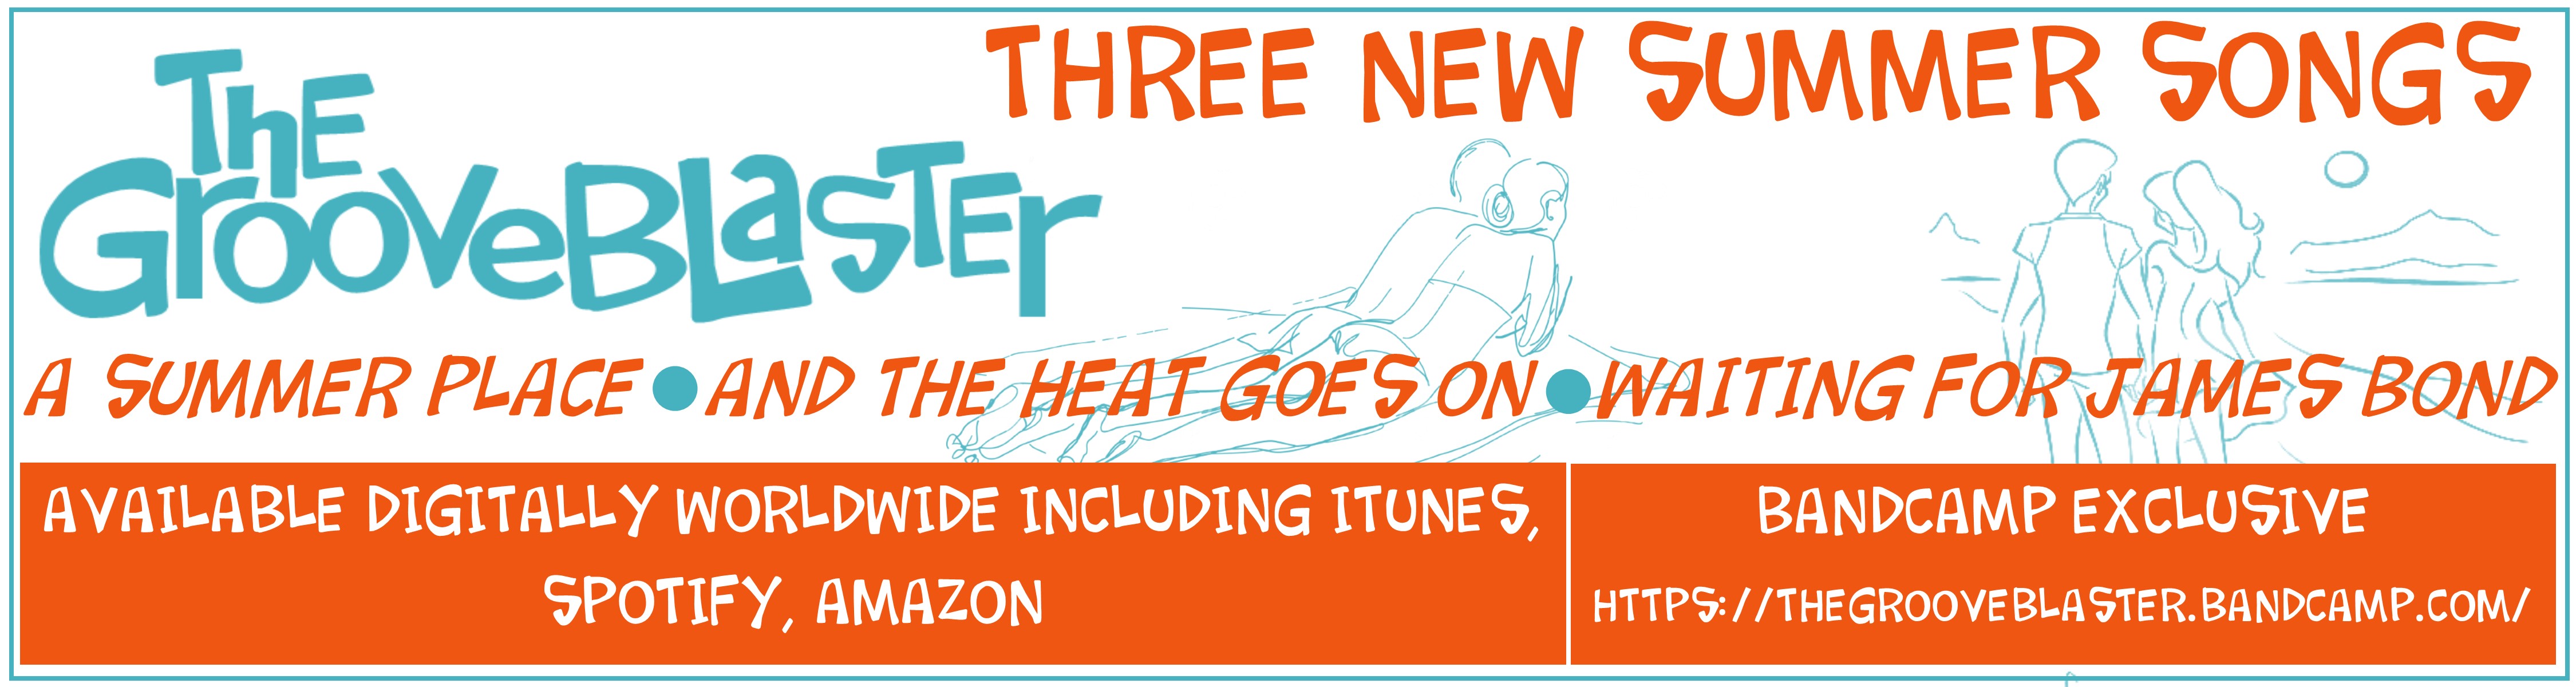 Three New Summer Songs The Grooveblaster